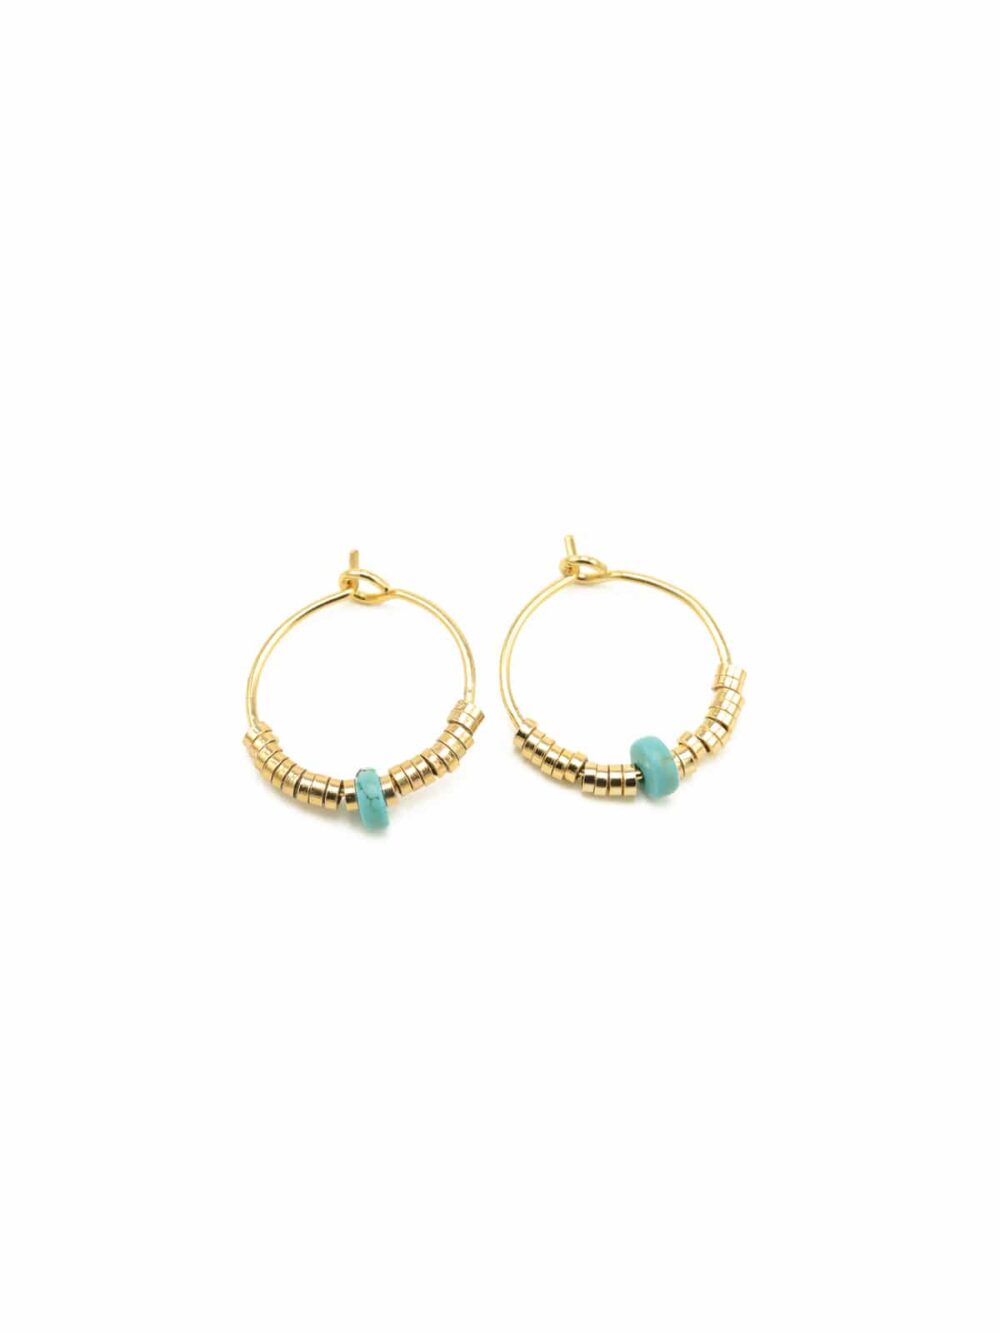 JOSEPHINE turquoise hoop earrings luj paris jewels